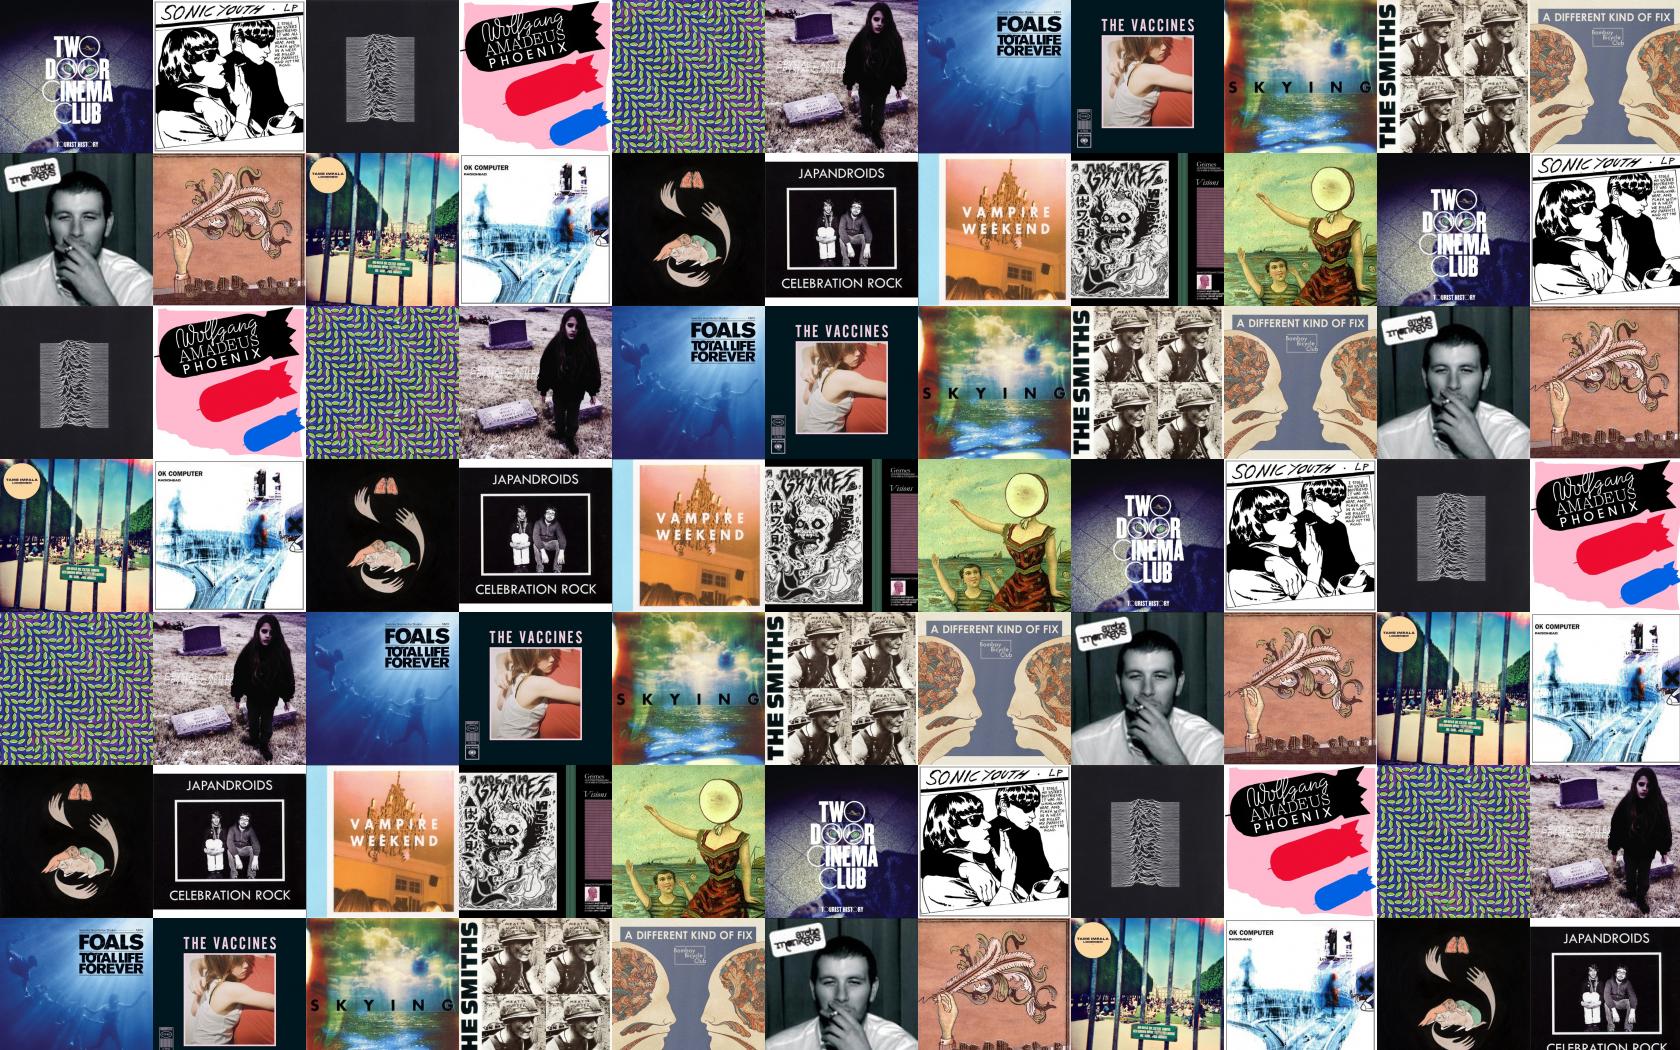 merriweather post pavilion « Tiled Desktop Wallpaper